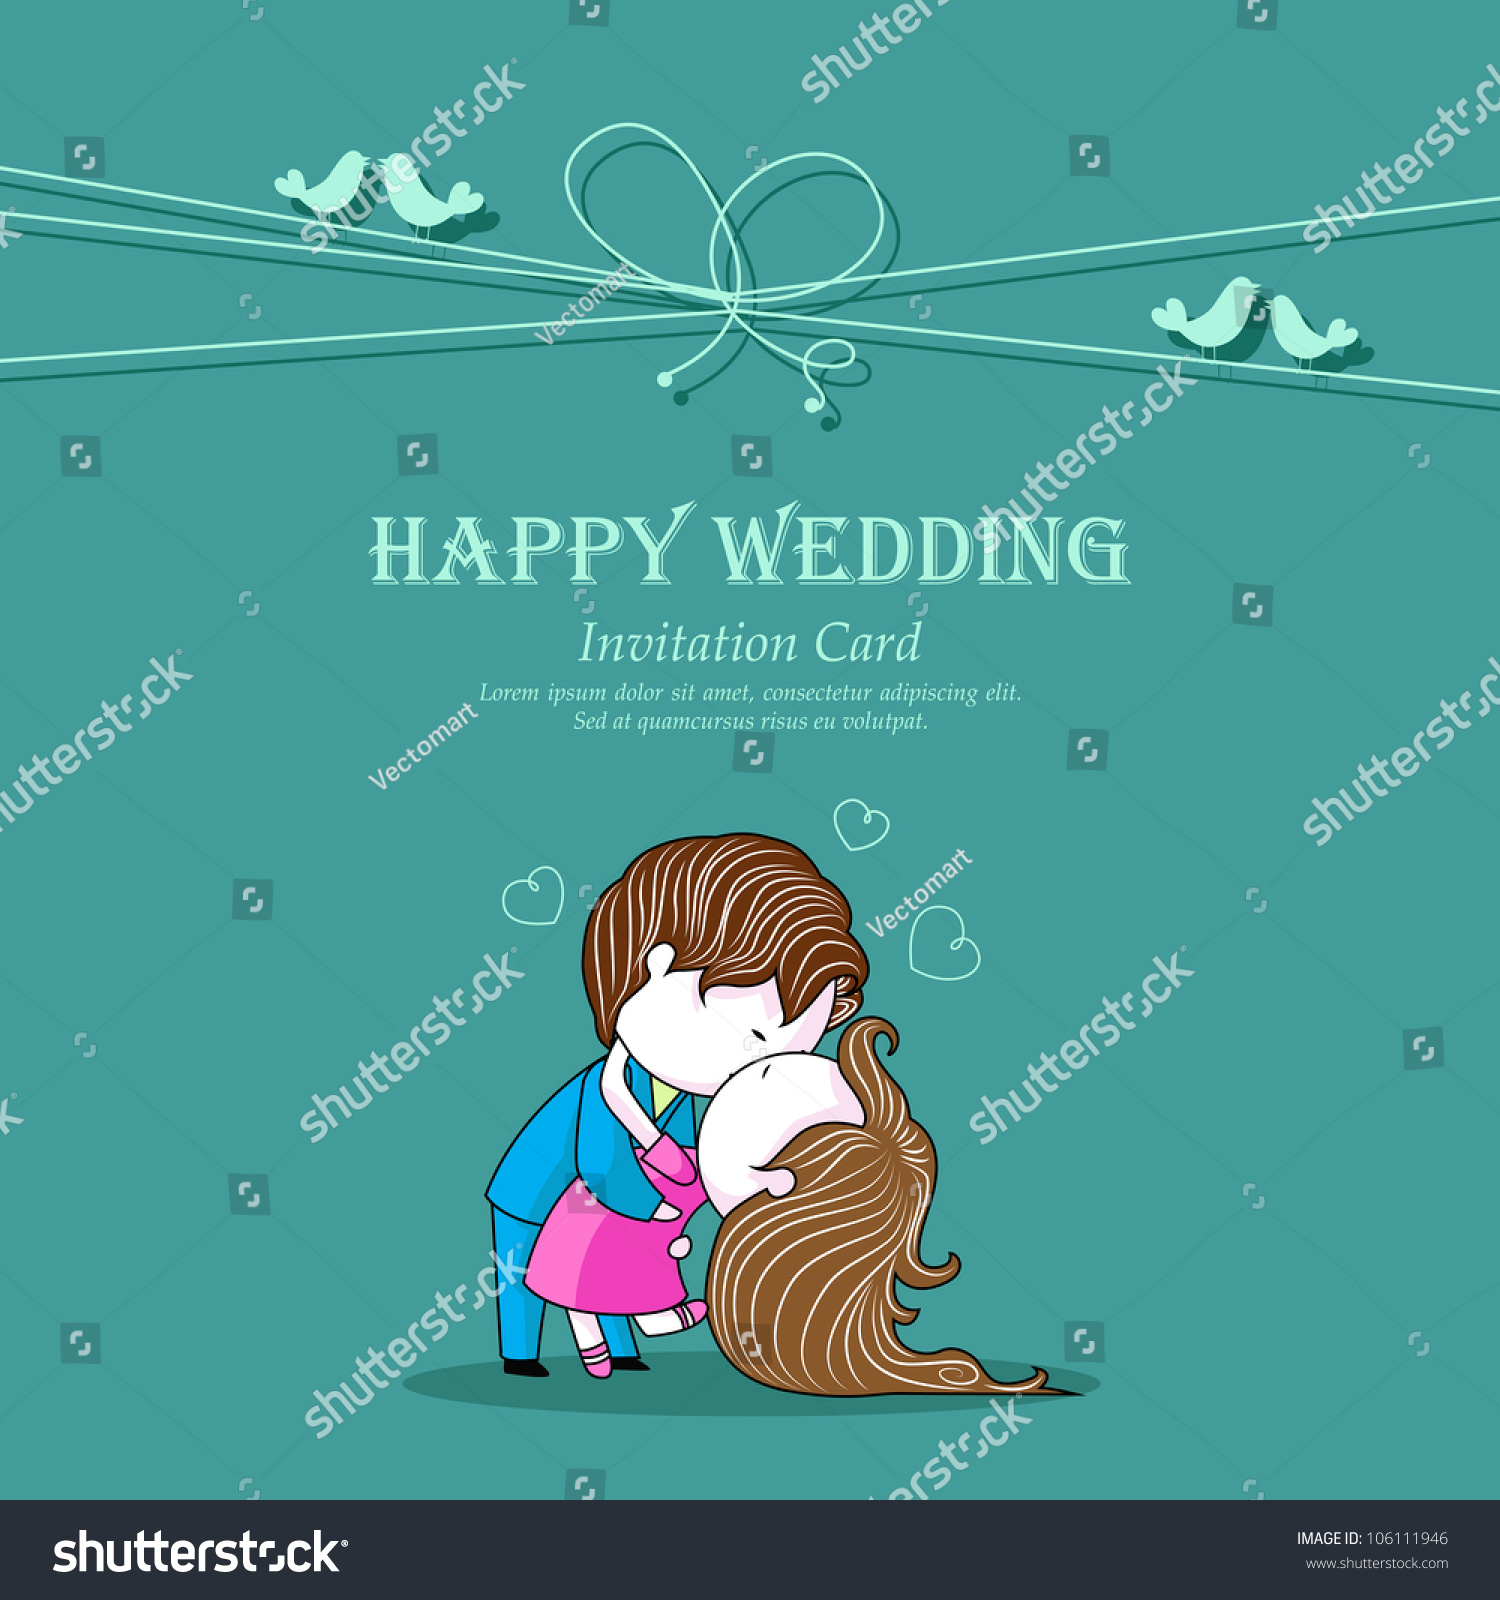 Vector Free Download Wedding Card